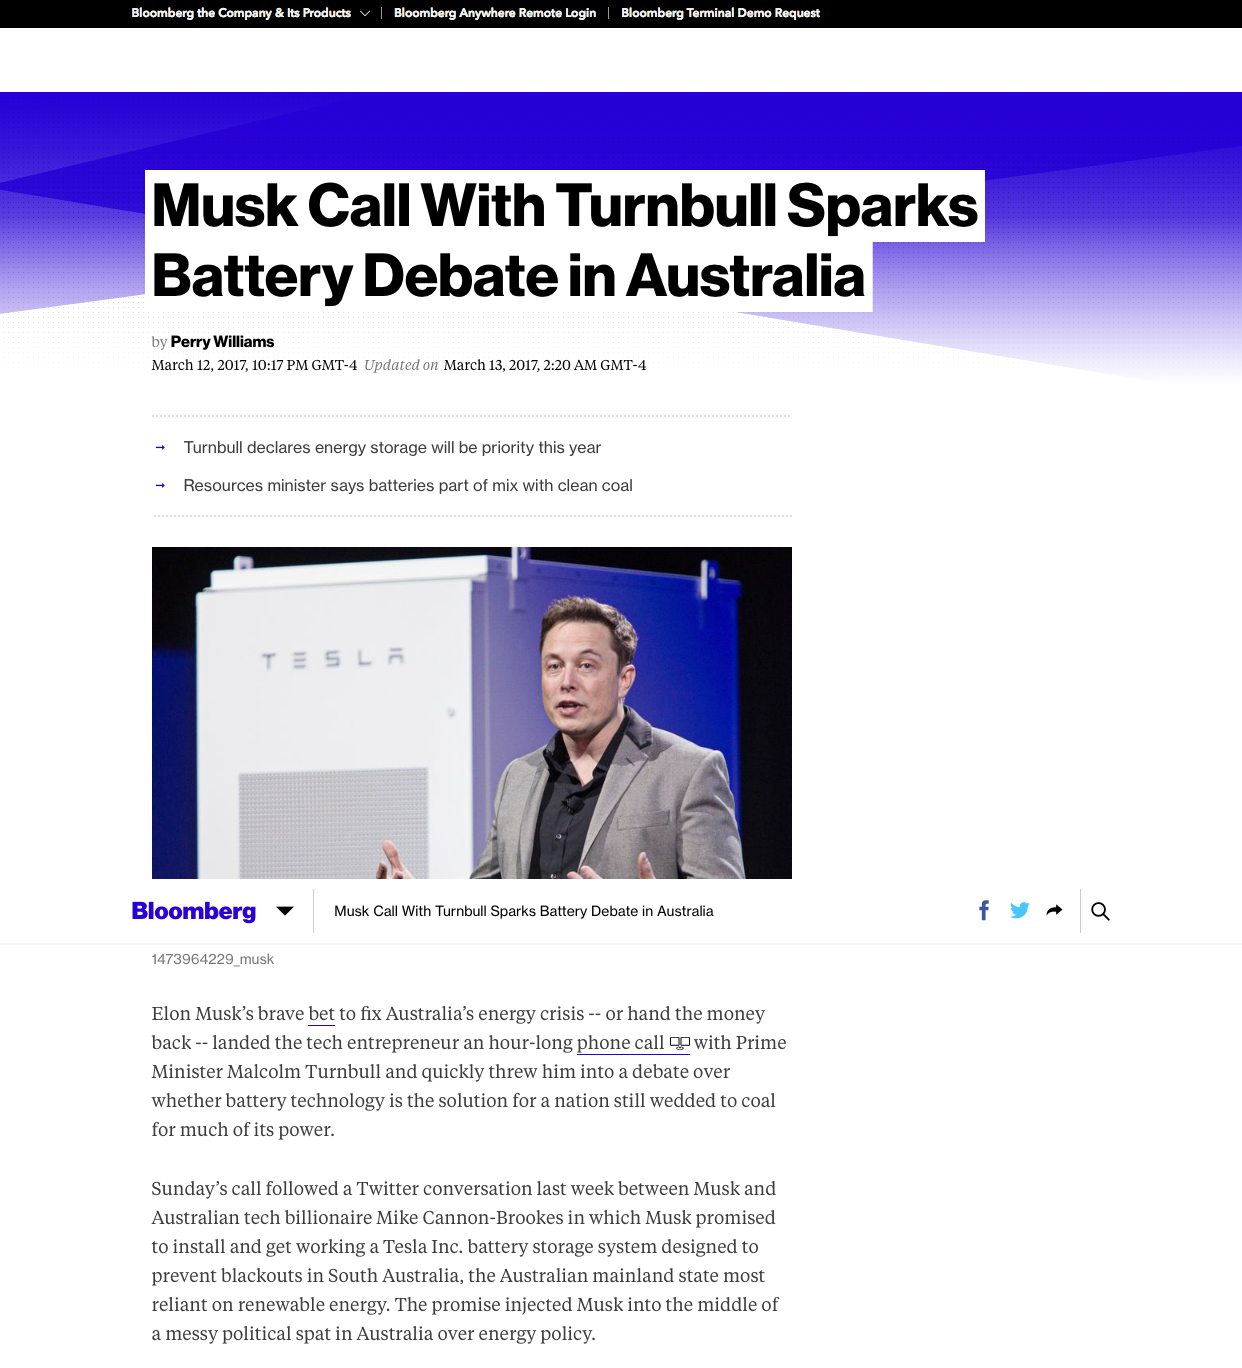 Elon Musk’s Brave Bet To Fix Australia’s Energy Crisis